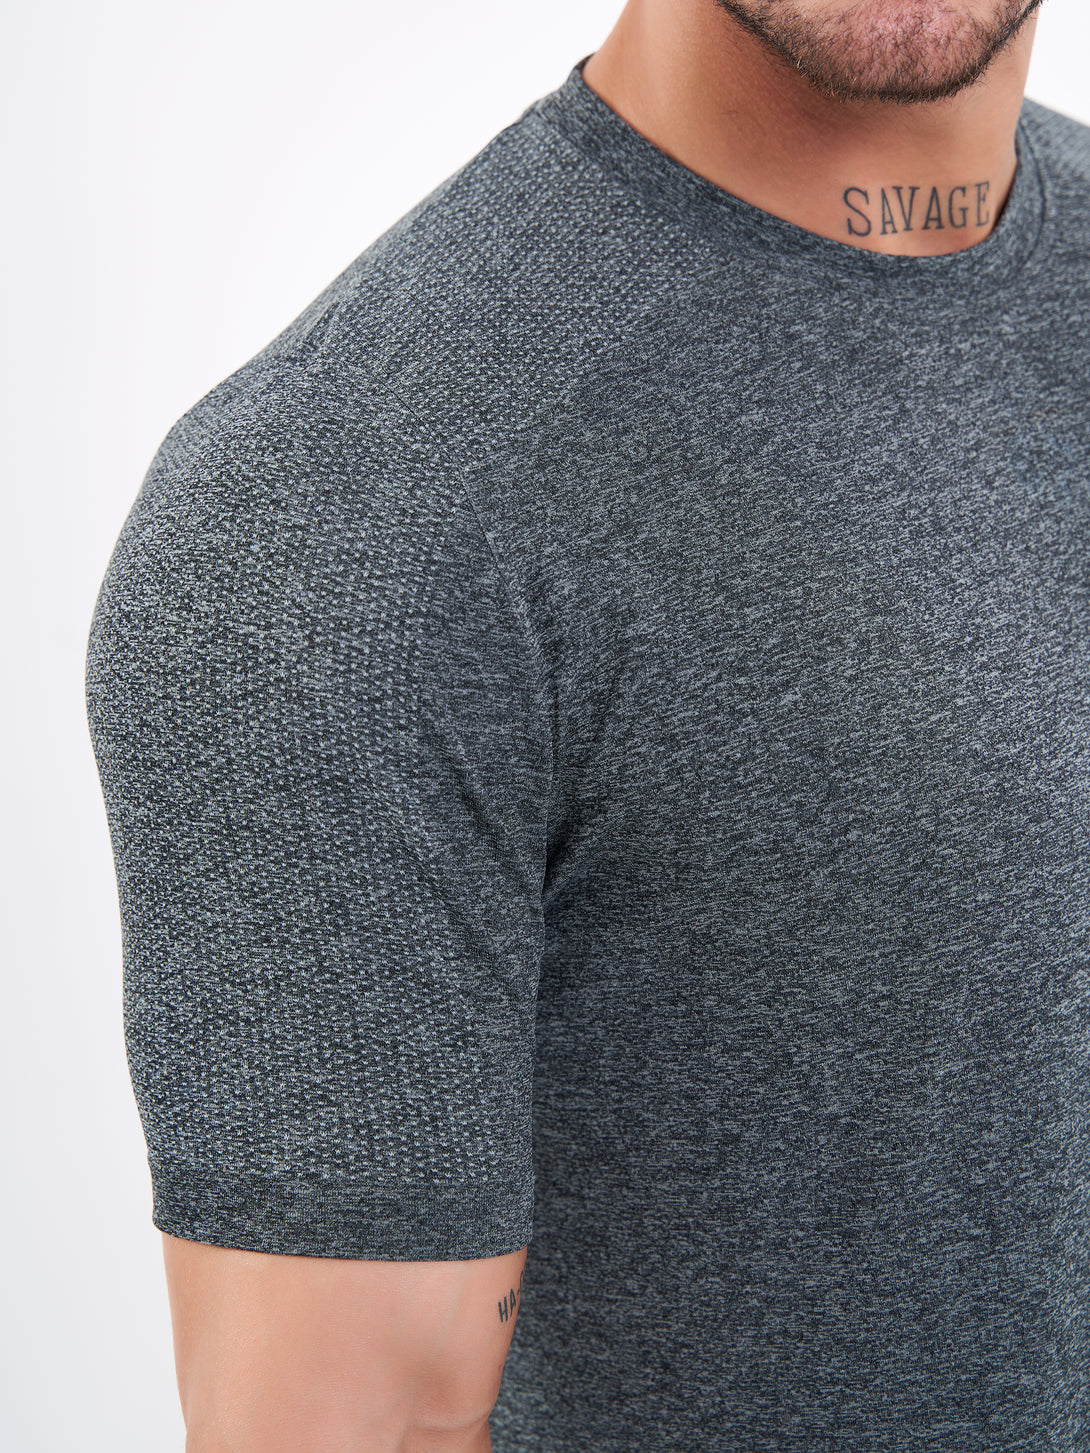 A Man Wearing Deep Black Color Unisex Seamless Melange T-Shirt. Enhanced Comfort